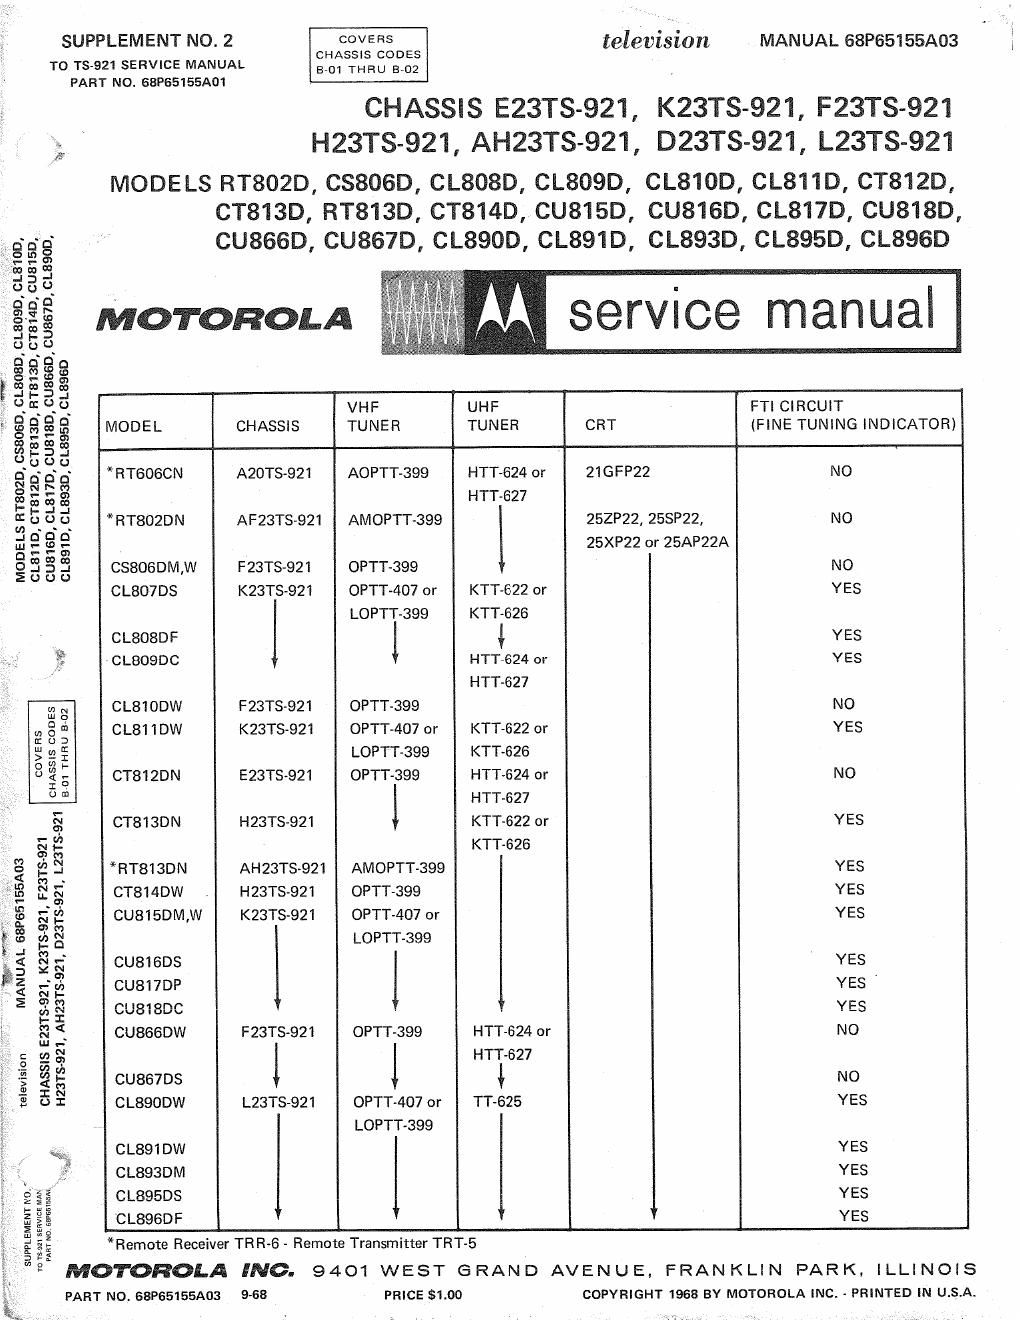 motorola cl 810 d service manual